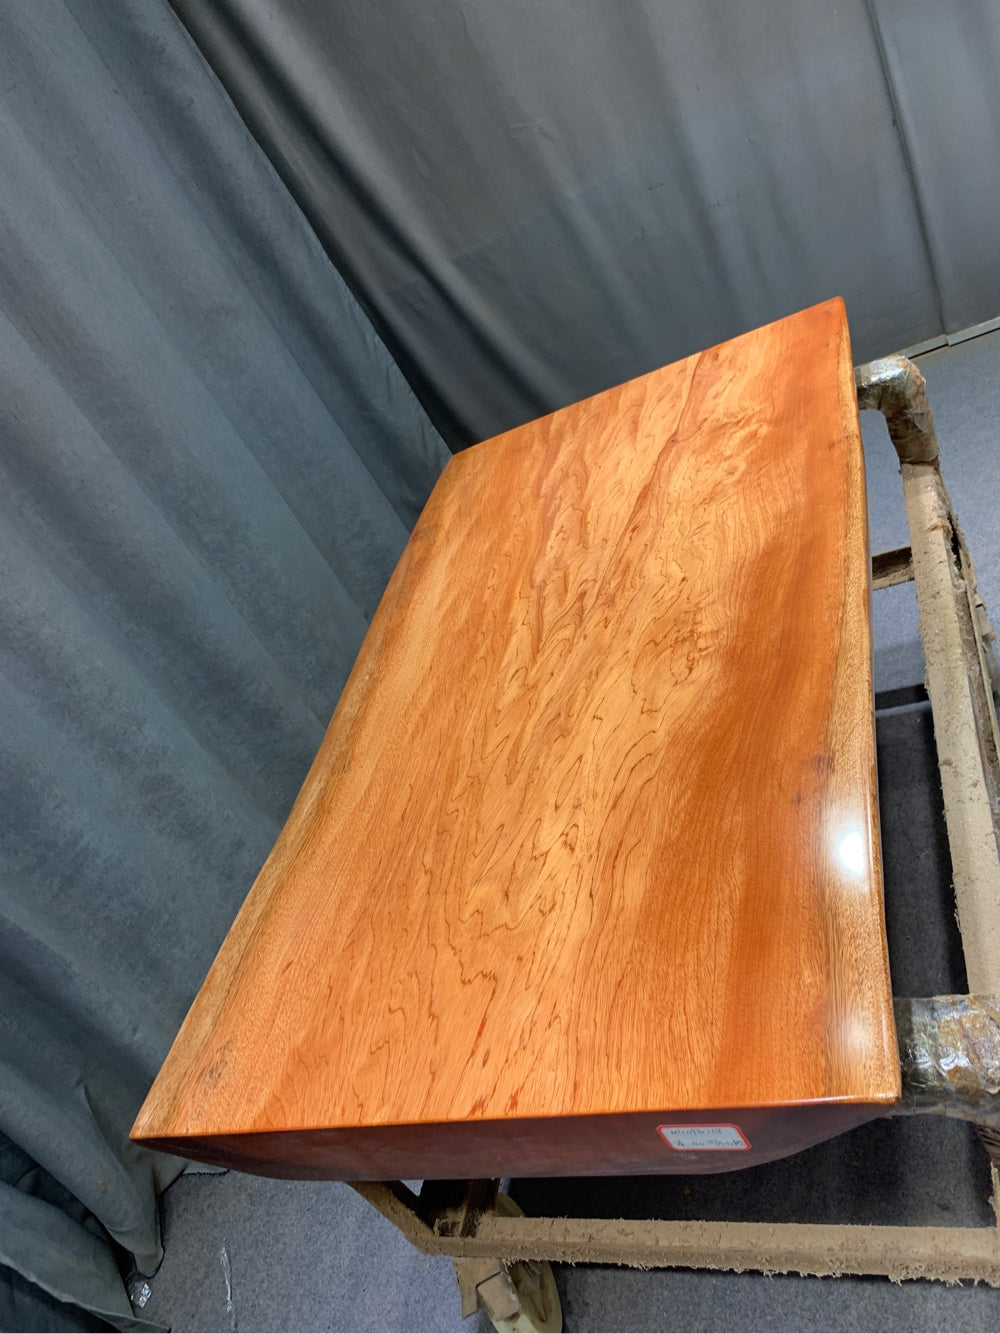 Bintangor wood slab, Bintangor wood table, Bintangor wood